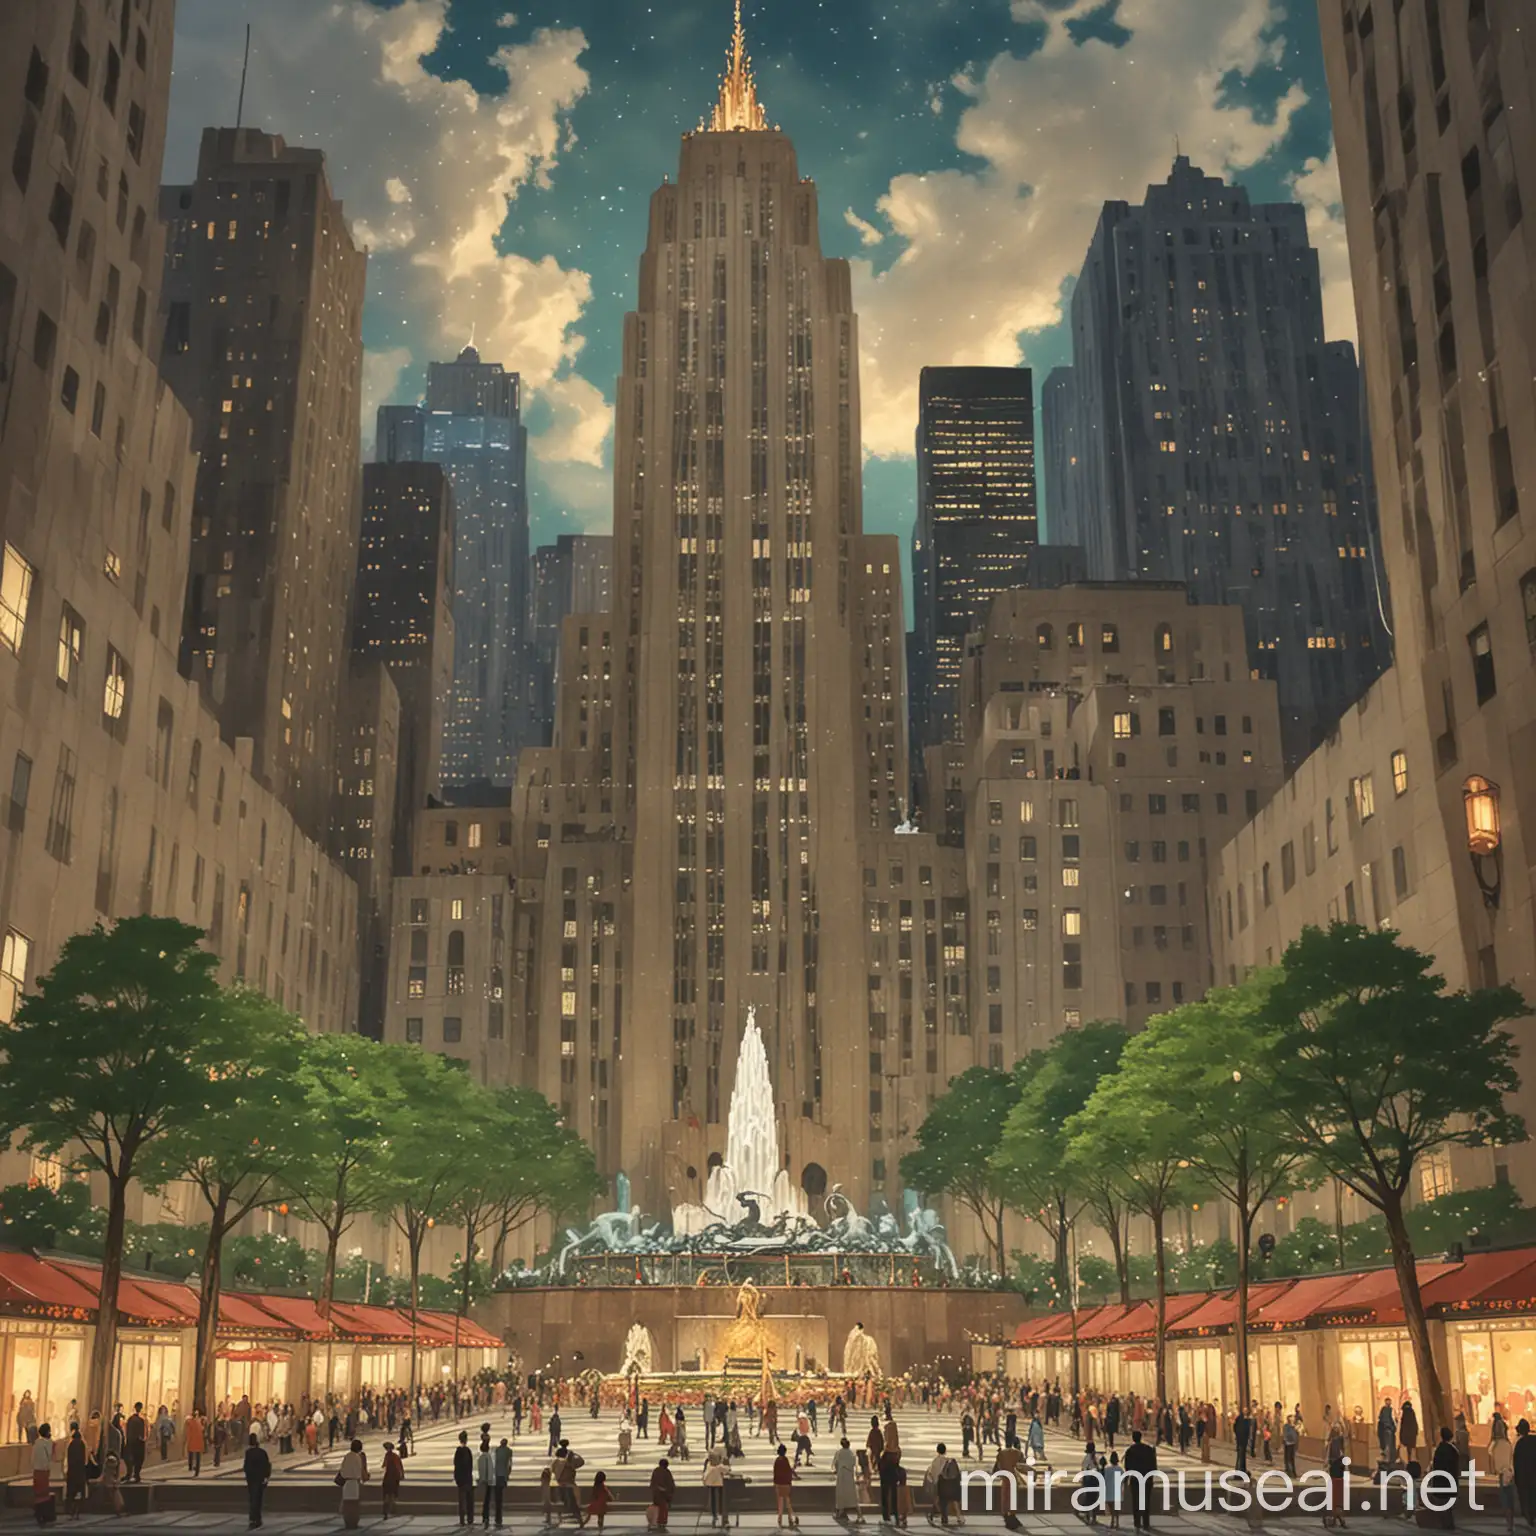 create an image of Rockefeller Center in NYC in the style of Hayao Miyazaki Ghibli Studio art